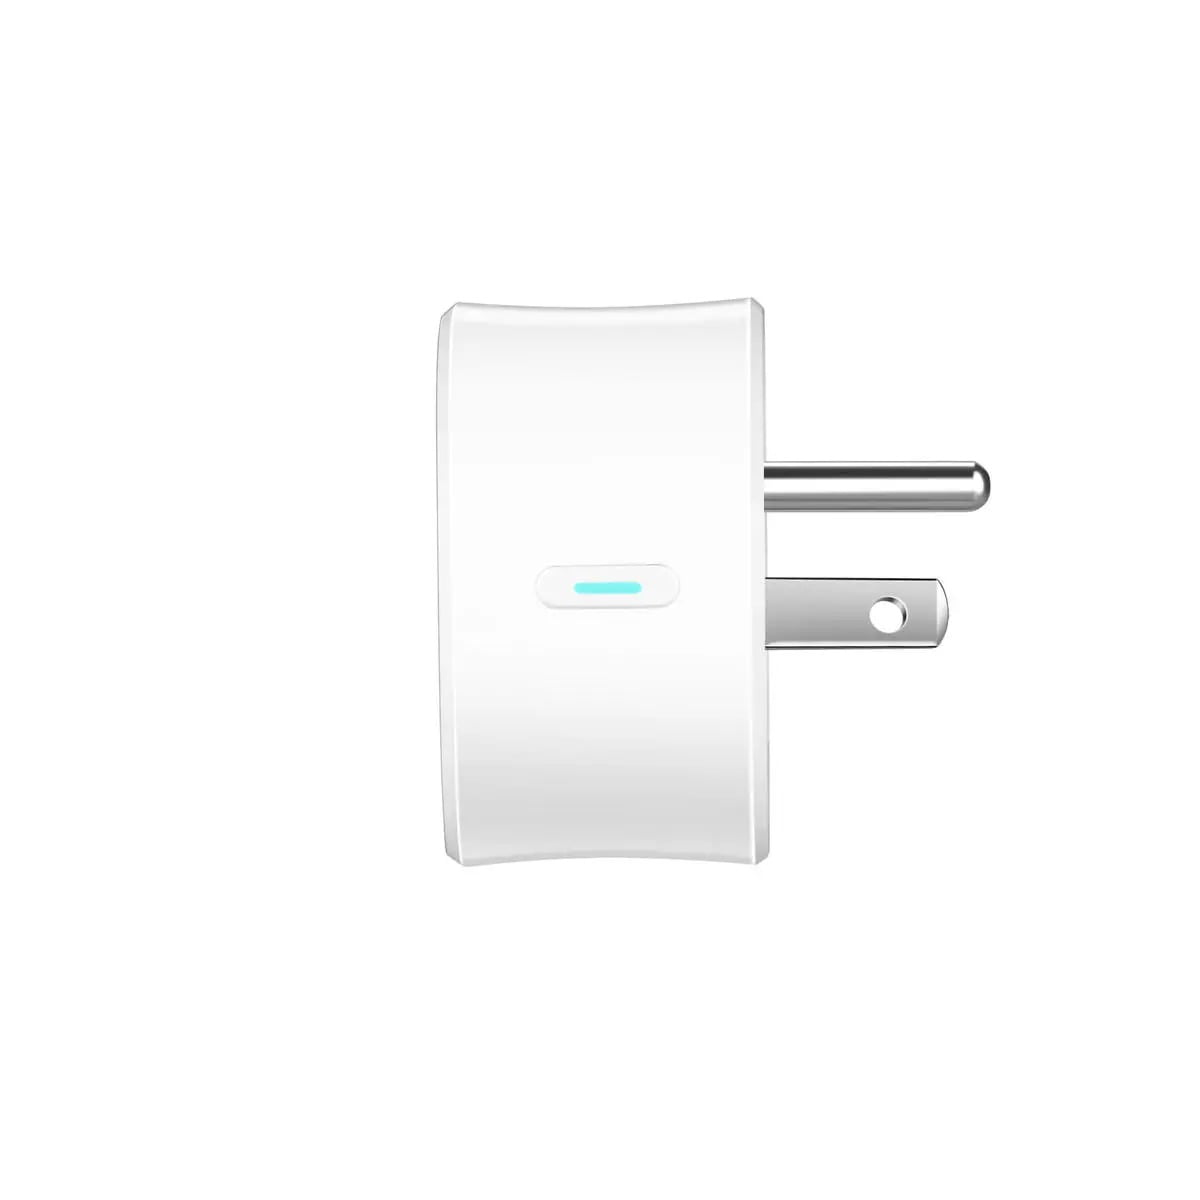 SP11 10A WiFi Smart Plug Socket Switch US Plug Remote control Power Strip Timing (11)